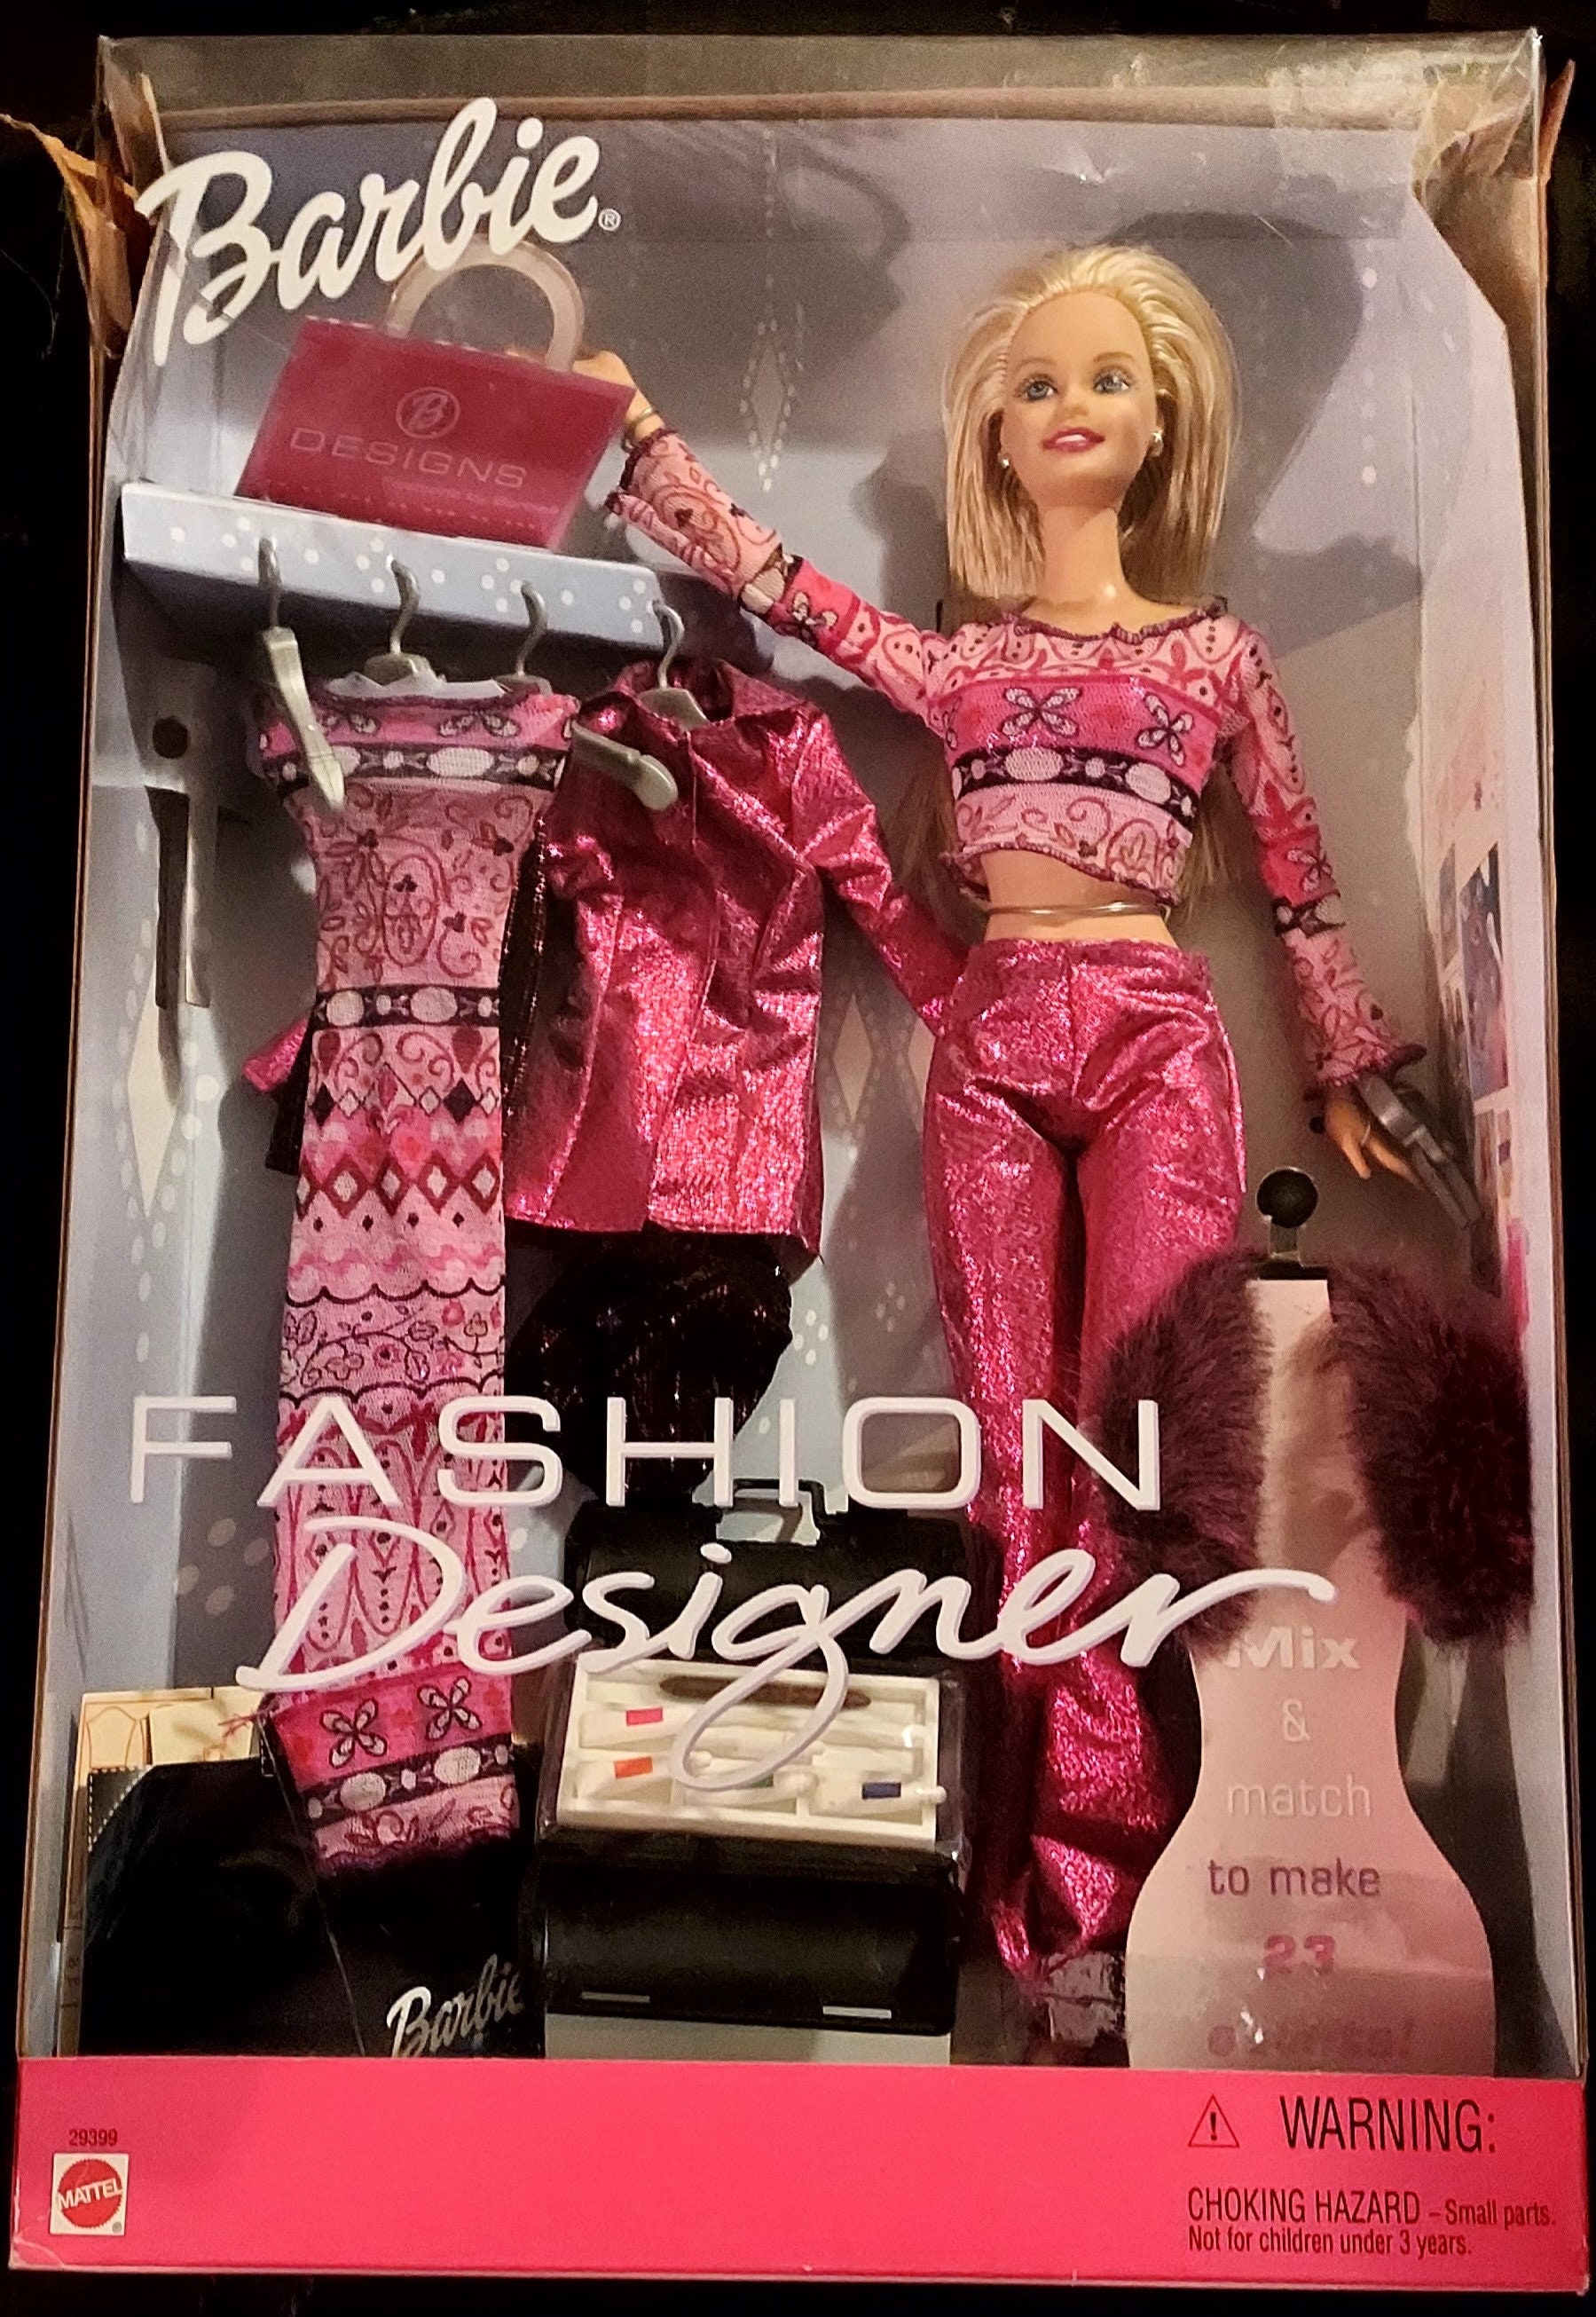 BARBIE, Barbie Fashion Designer, Mix 23 different outfits, Mattel, #29399